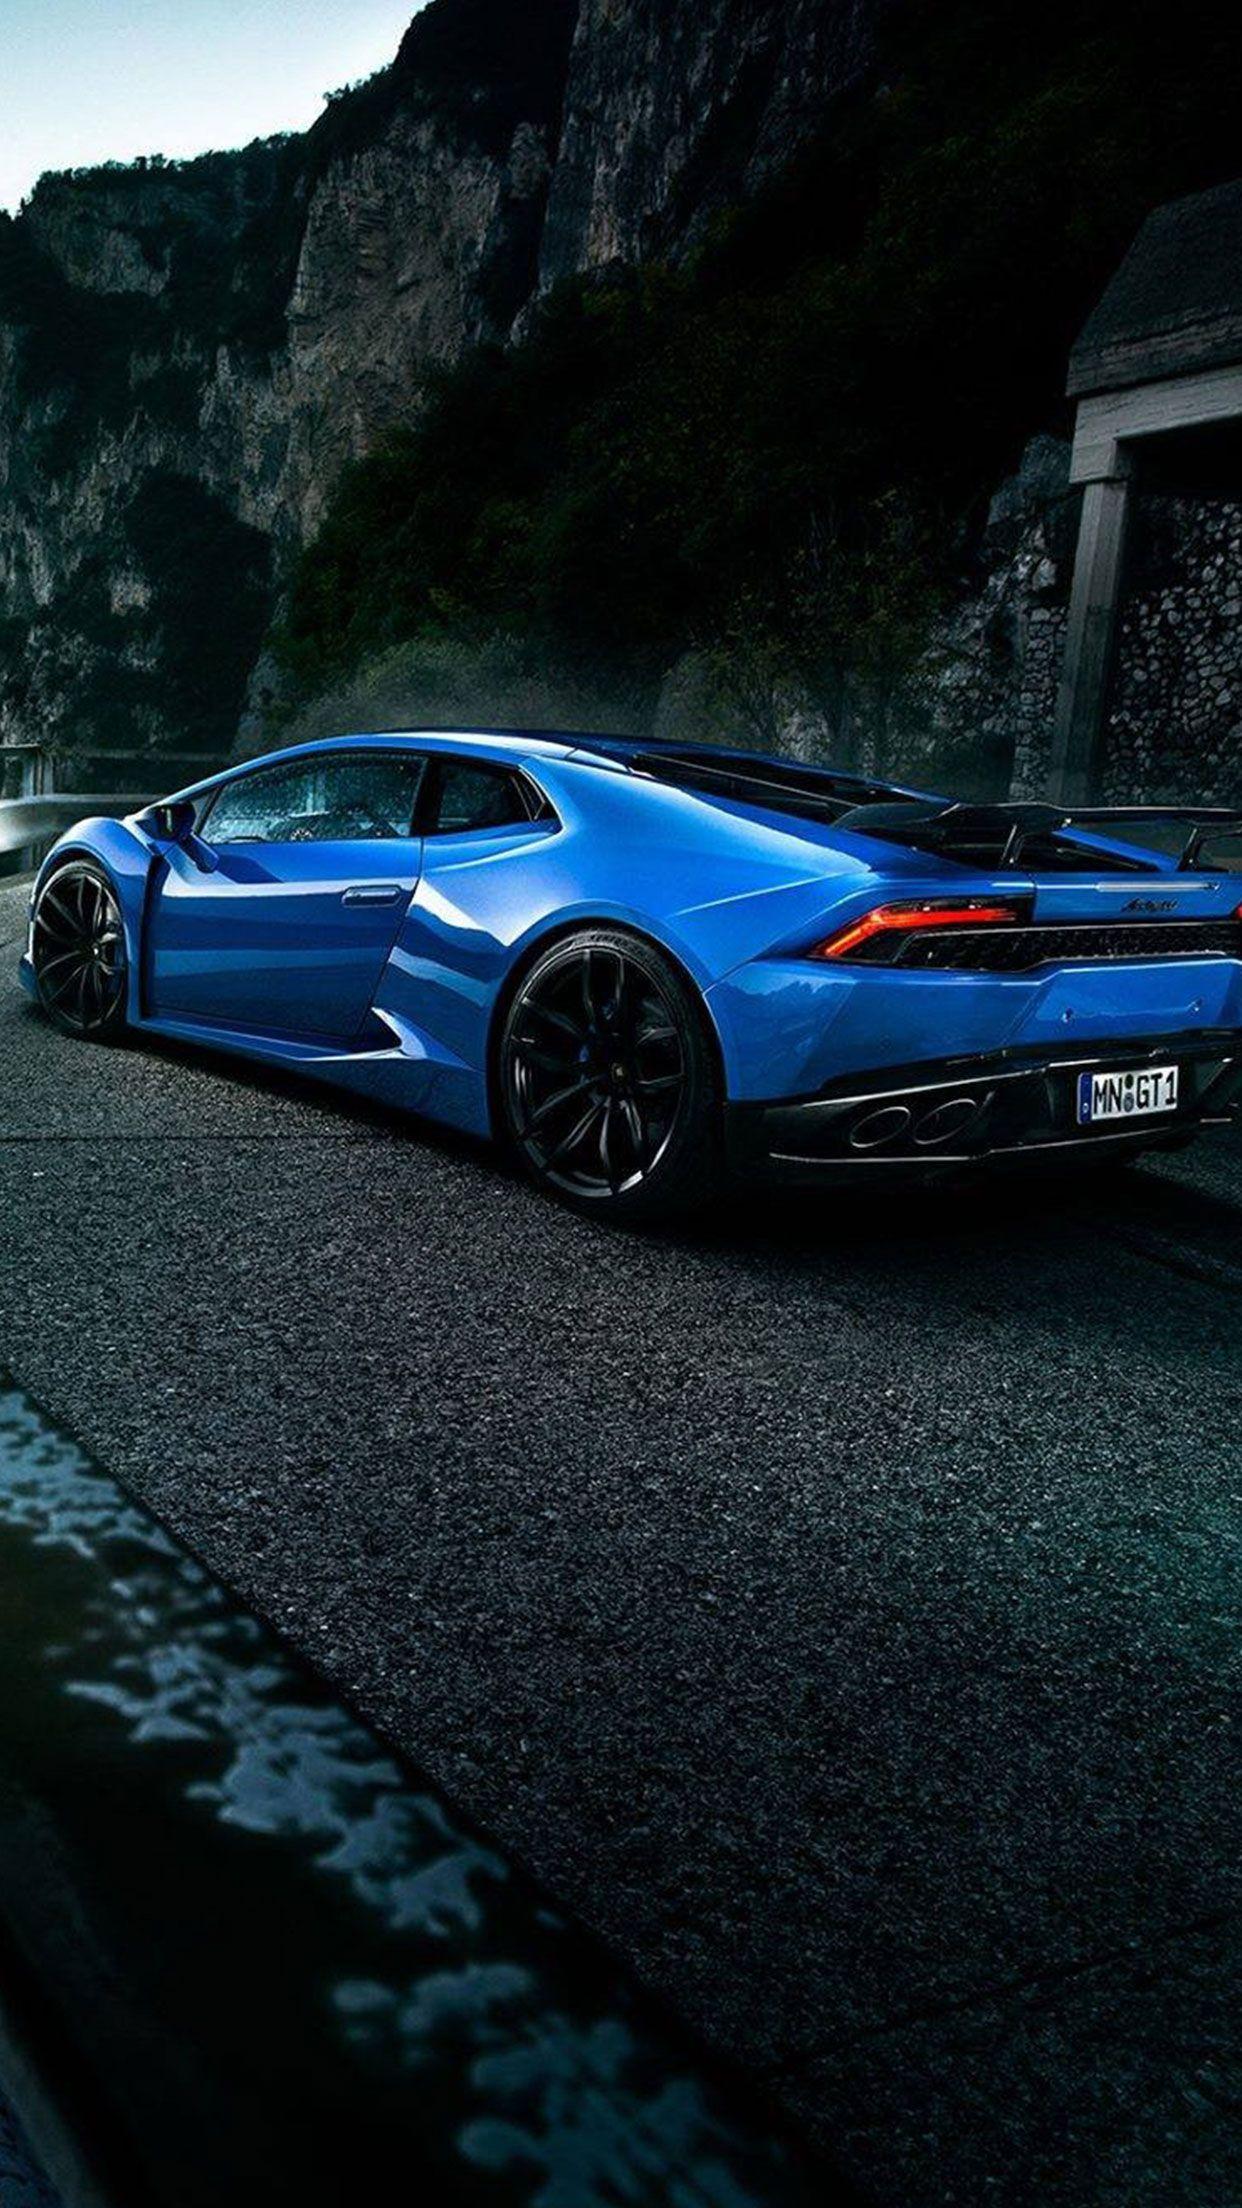 Blue Lamborghini car wallpaper #iPhone #android #blue #lamborghini